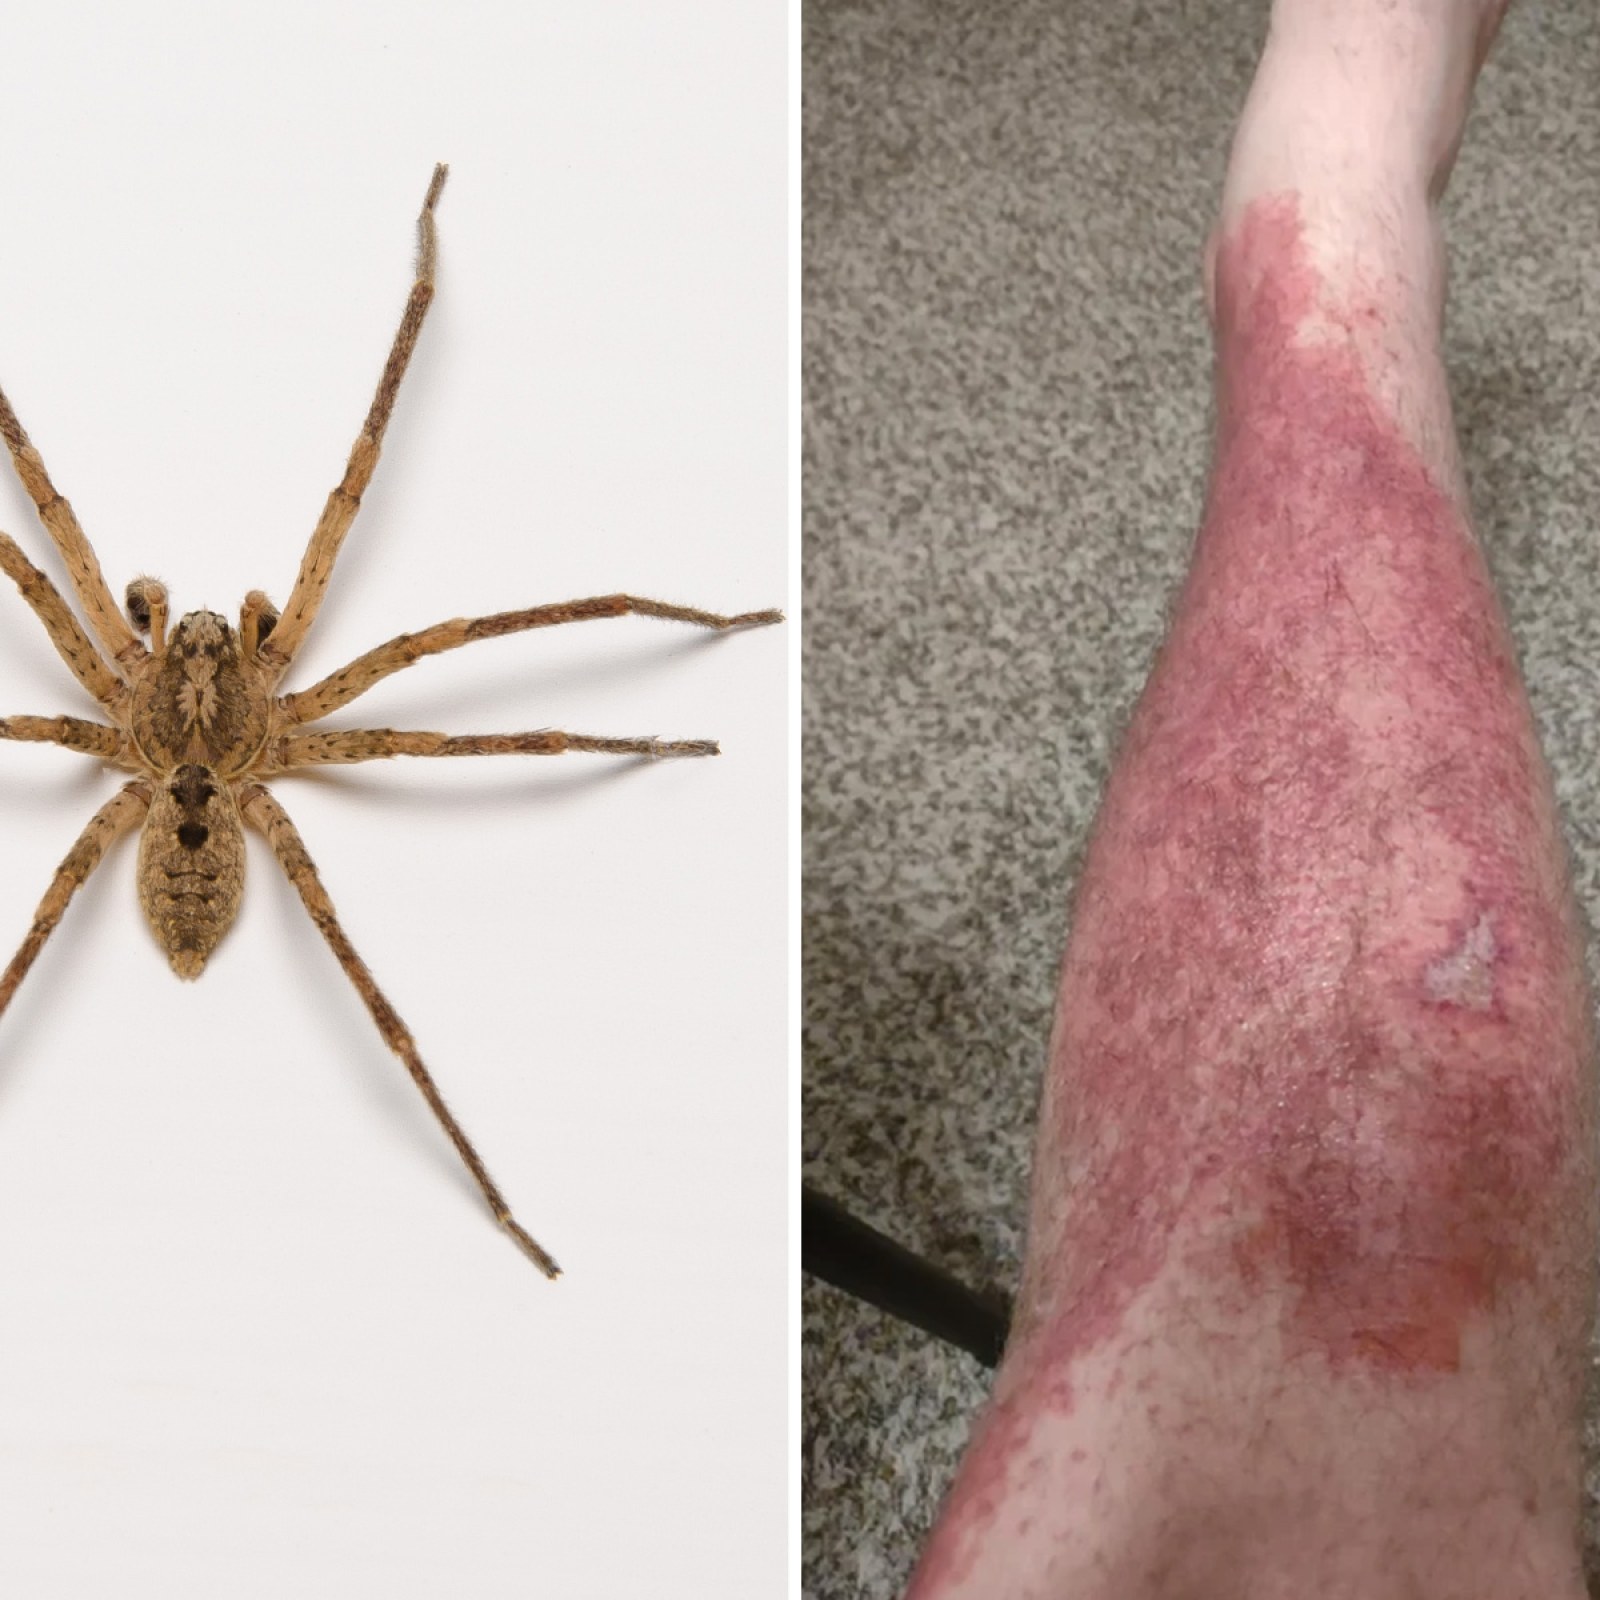 Most Dangerous Spider Bites